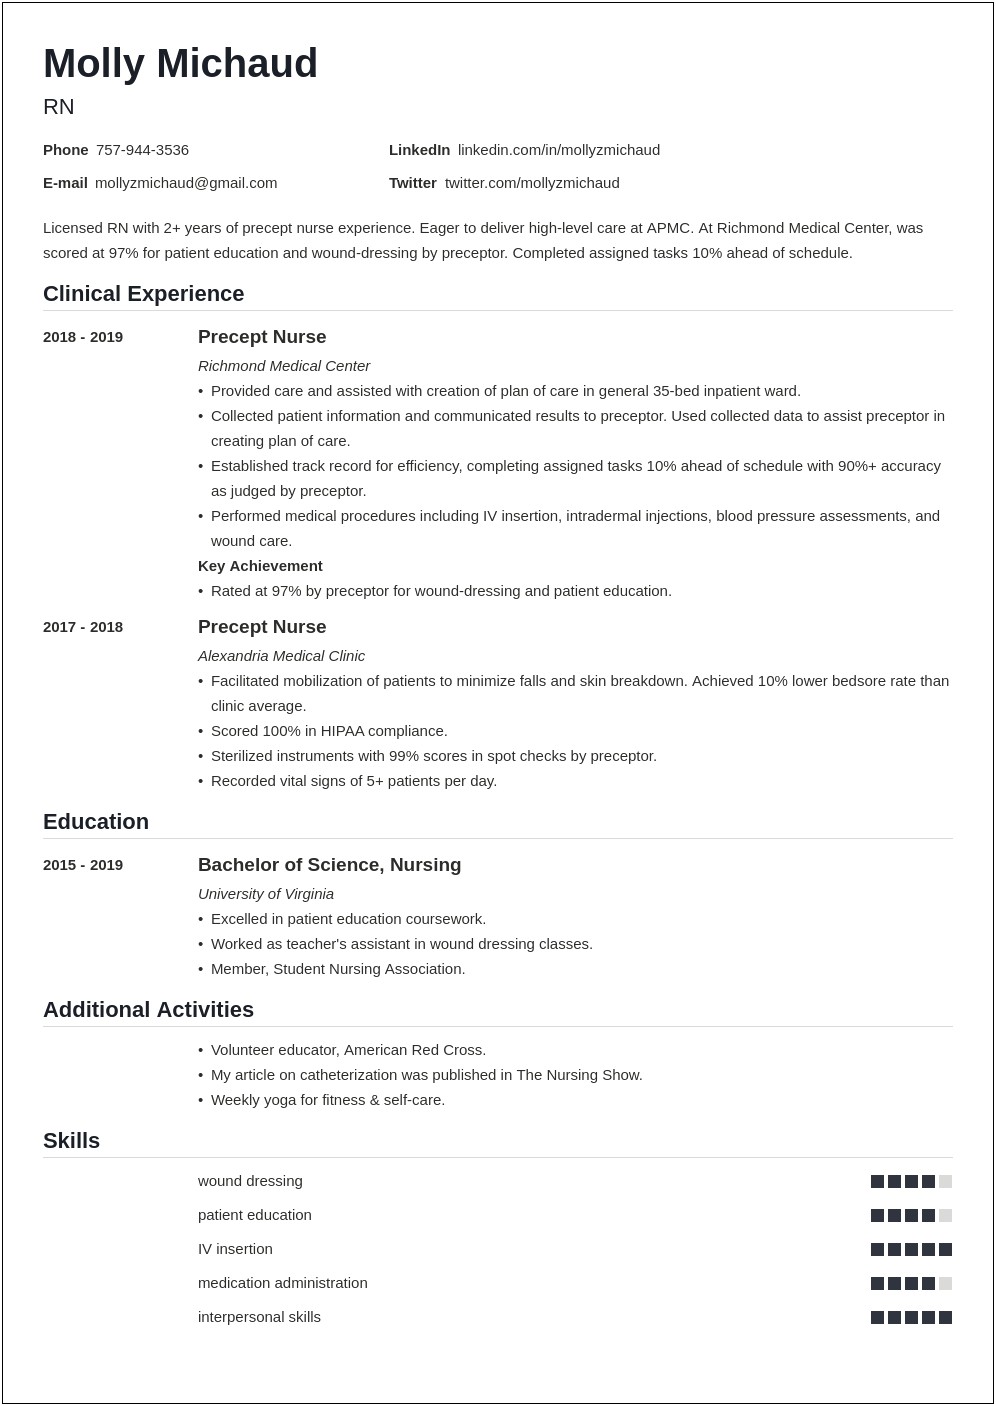 Skills Summary Student Nursing Resume